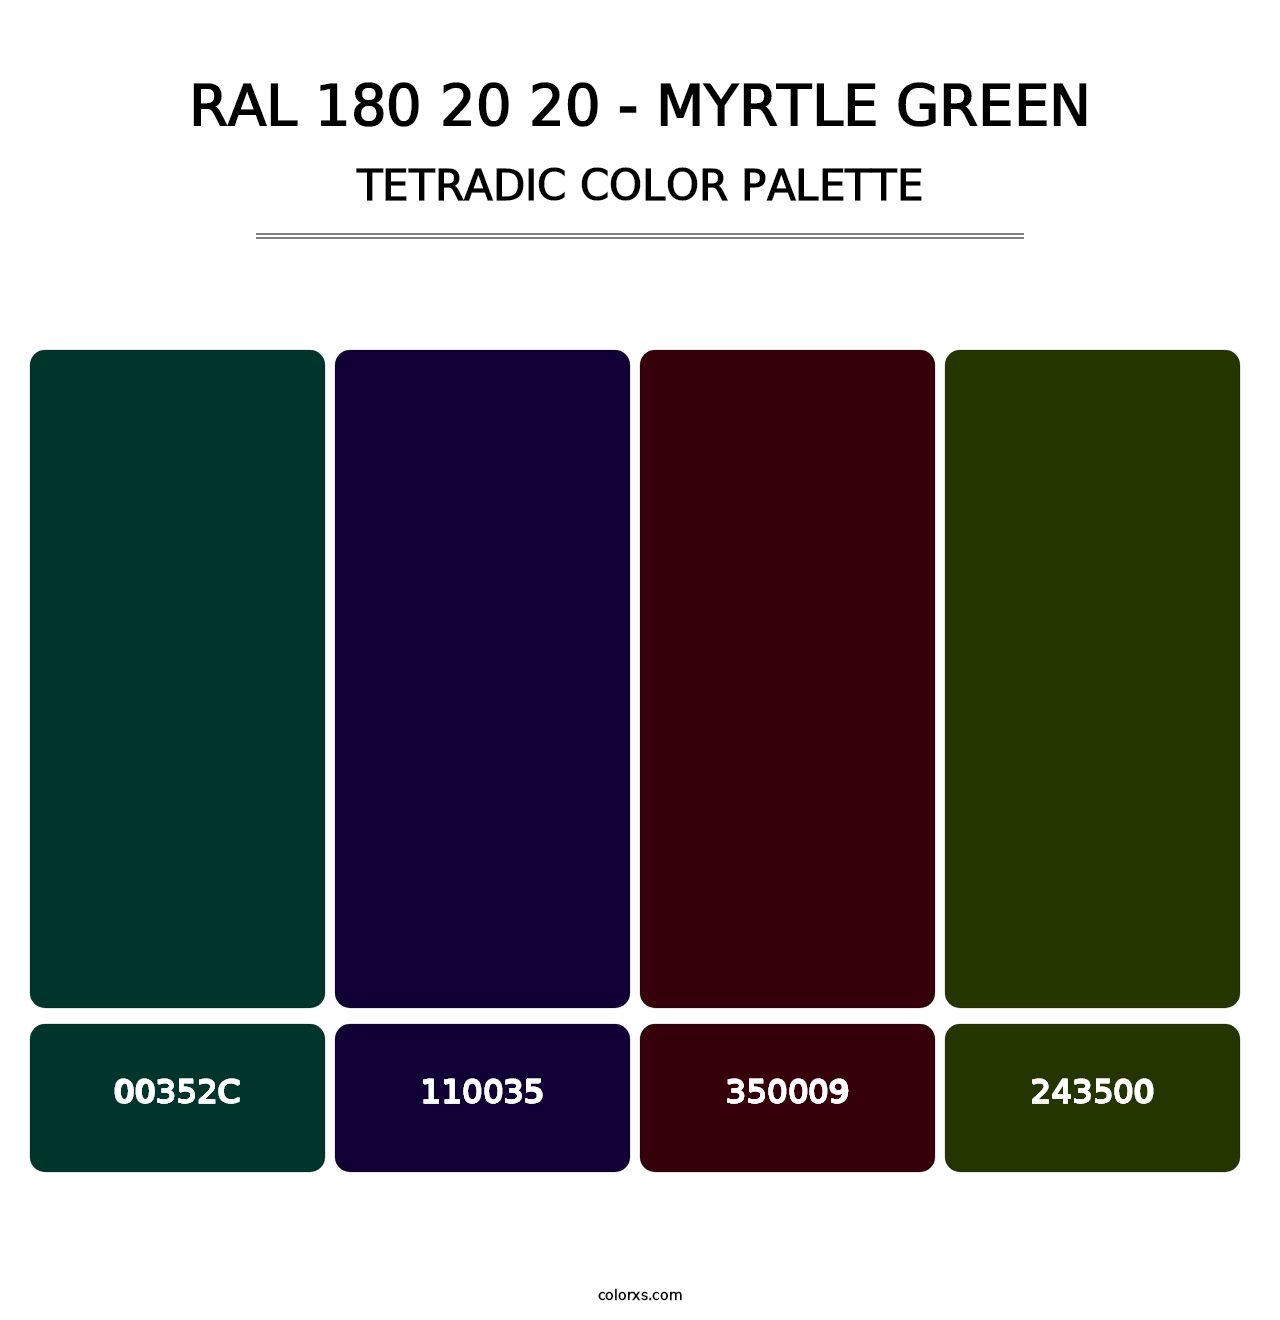 RAL 180 20 20 - Myrtle Green - Tetradic Color Palette